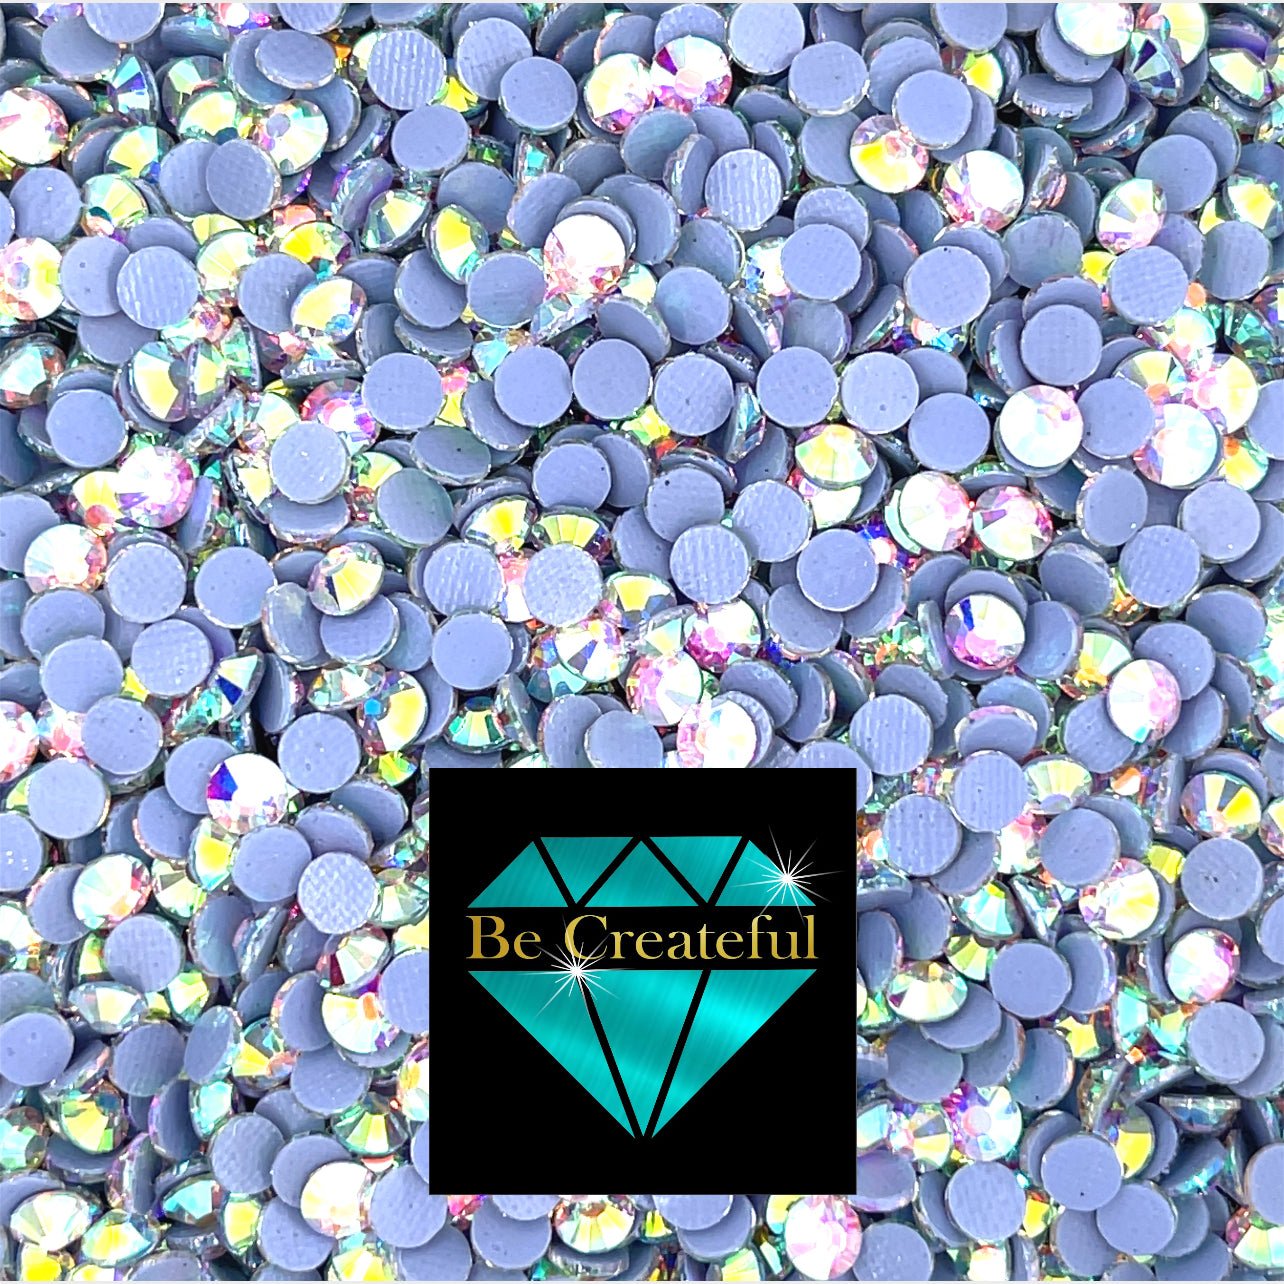 AAAA+Quality New Violet/Metal Crystal Hotfix Rhinestones Glass